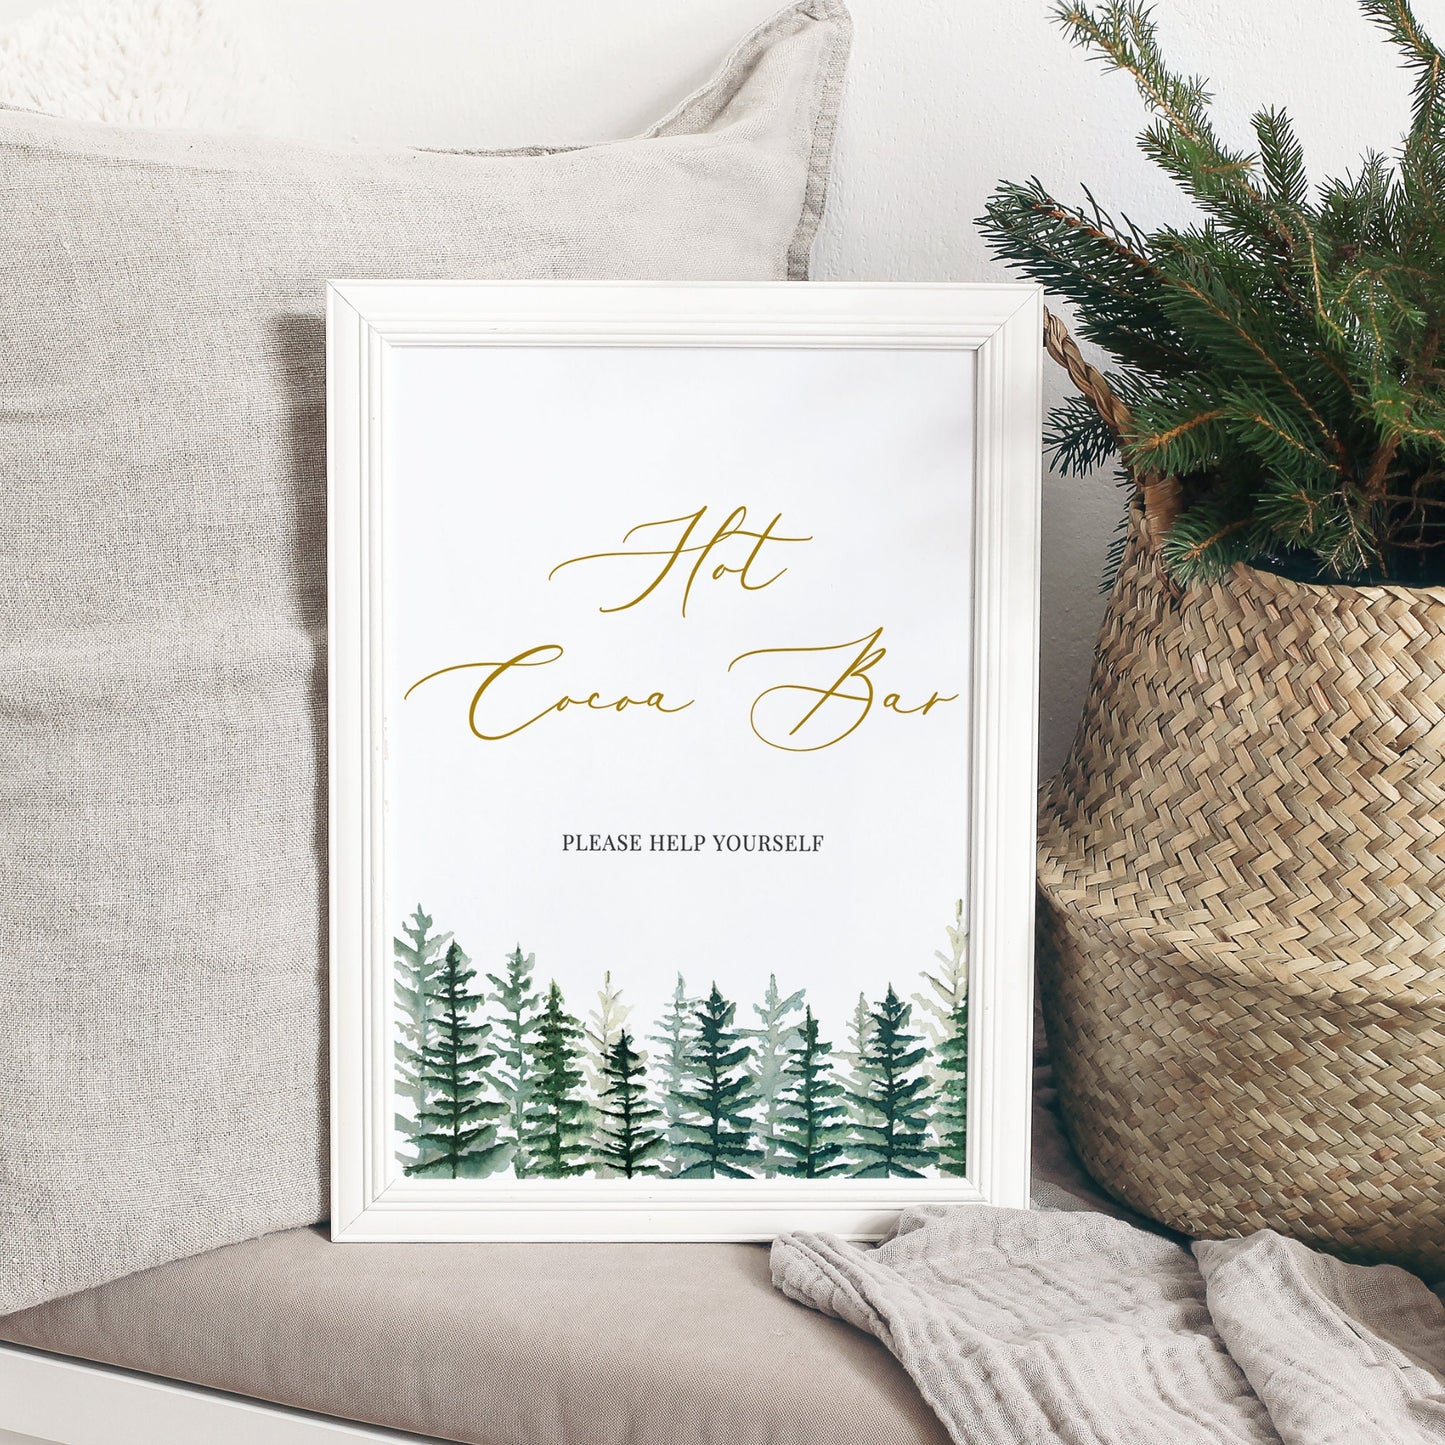 Editable Hot Cocoa Bar Sign Hot Chocolate Bar Sign Christmas Wedding Winter Pine Trees Template